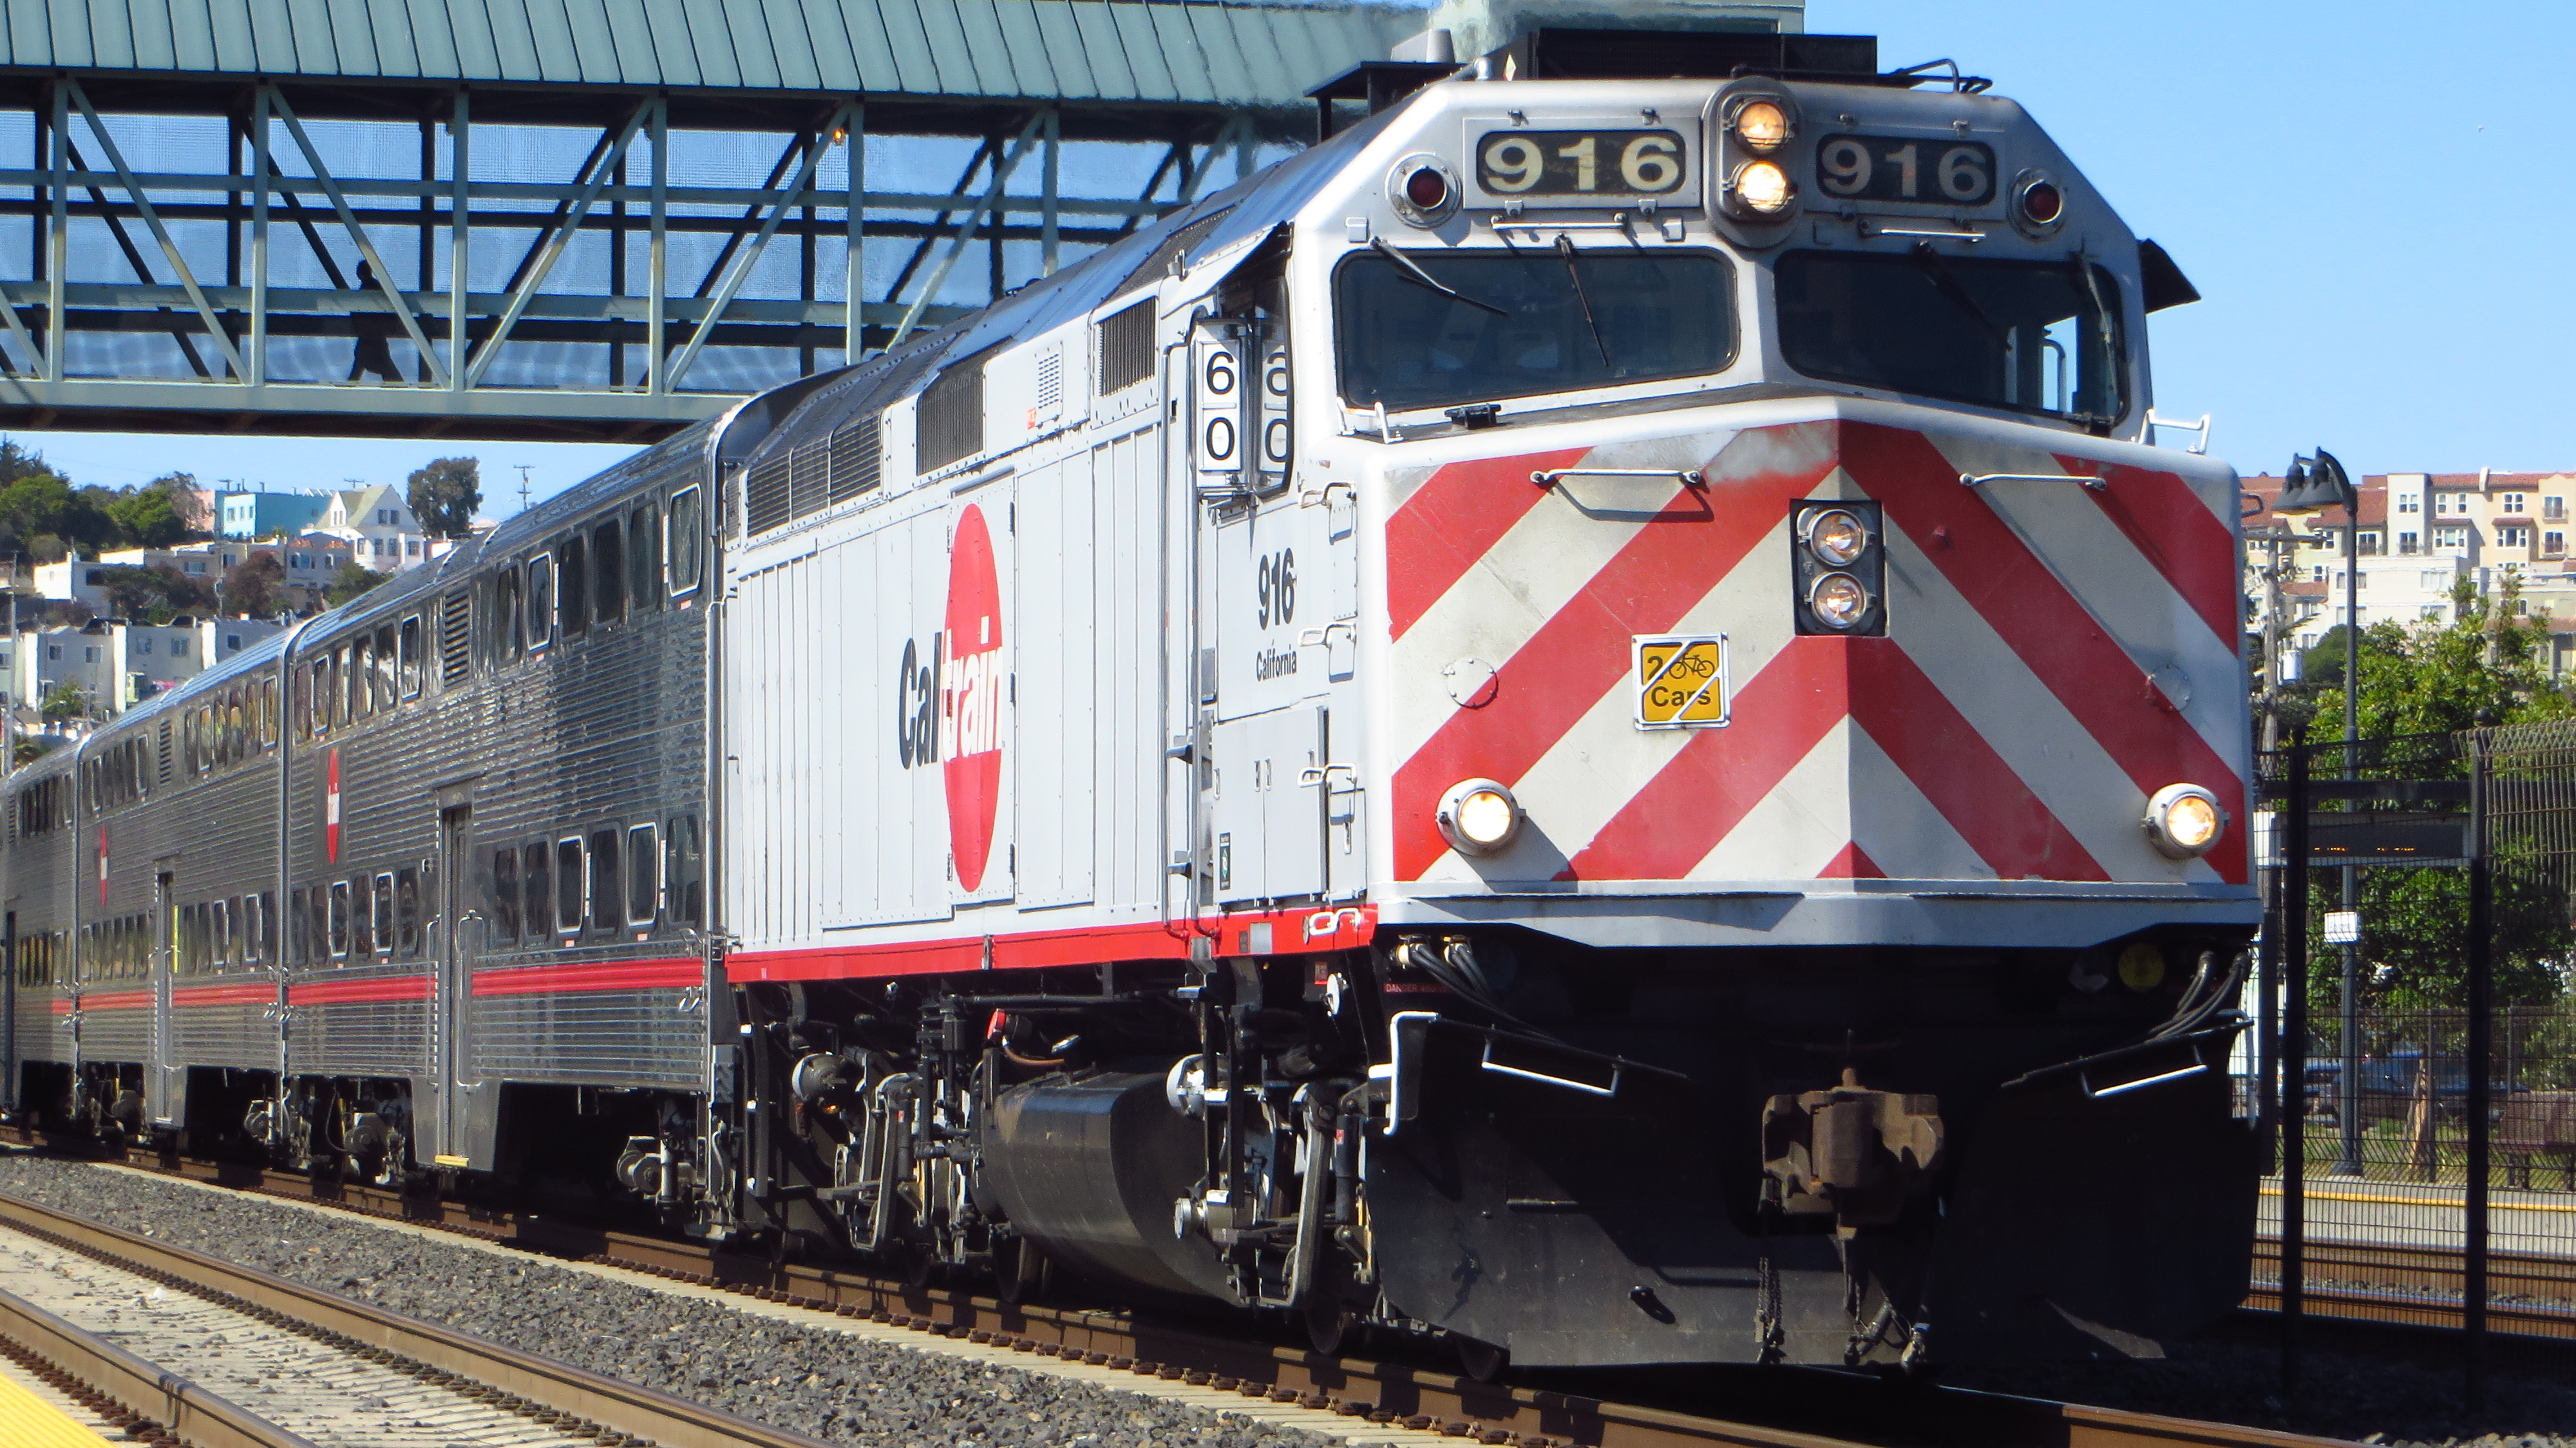 Caltrain locomotive unit 916, California, speeding through Bayshore Station to Tamien Station